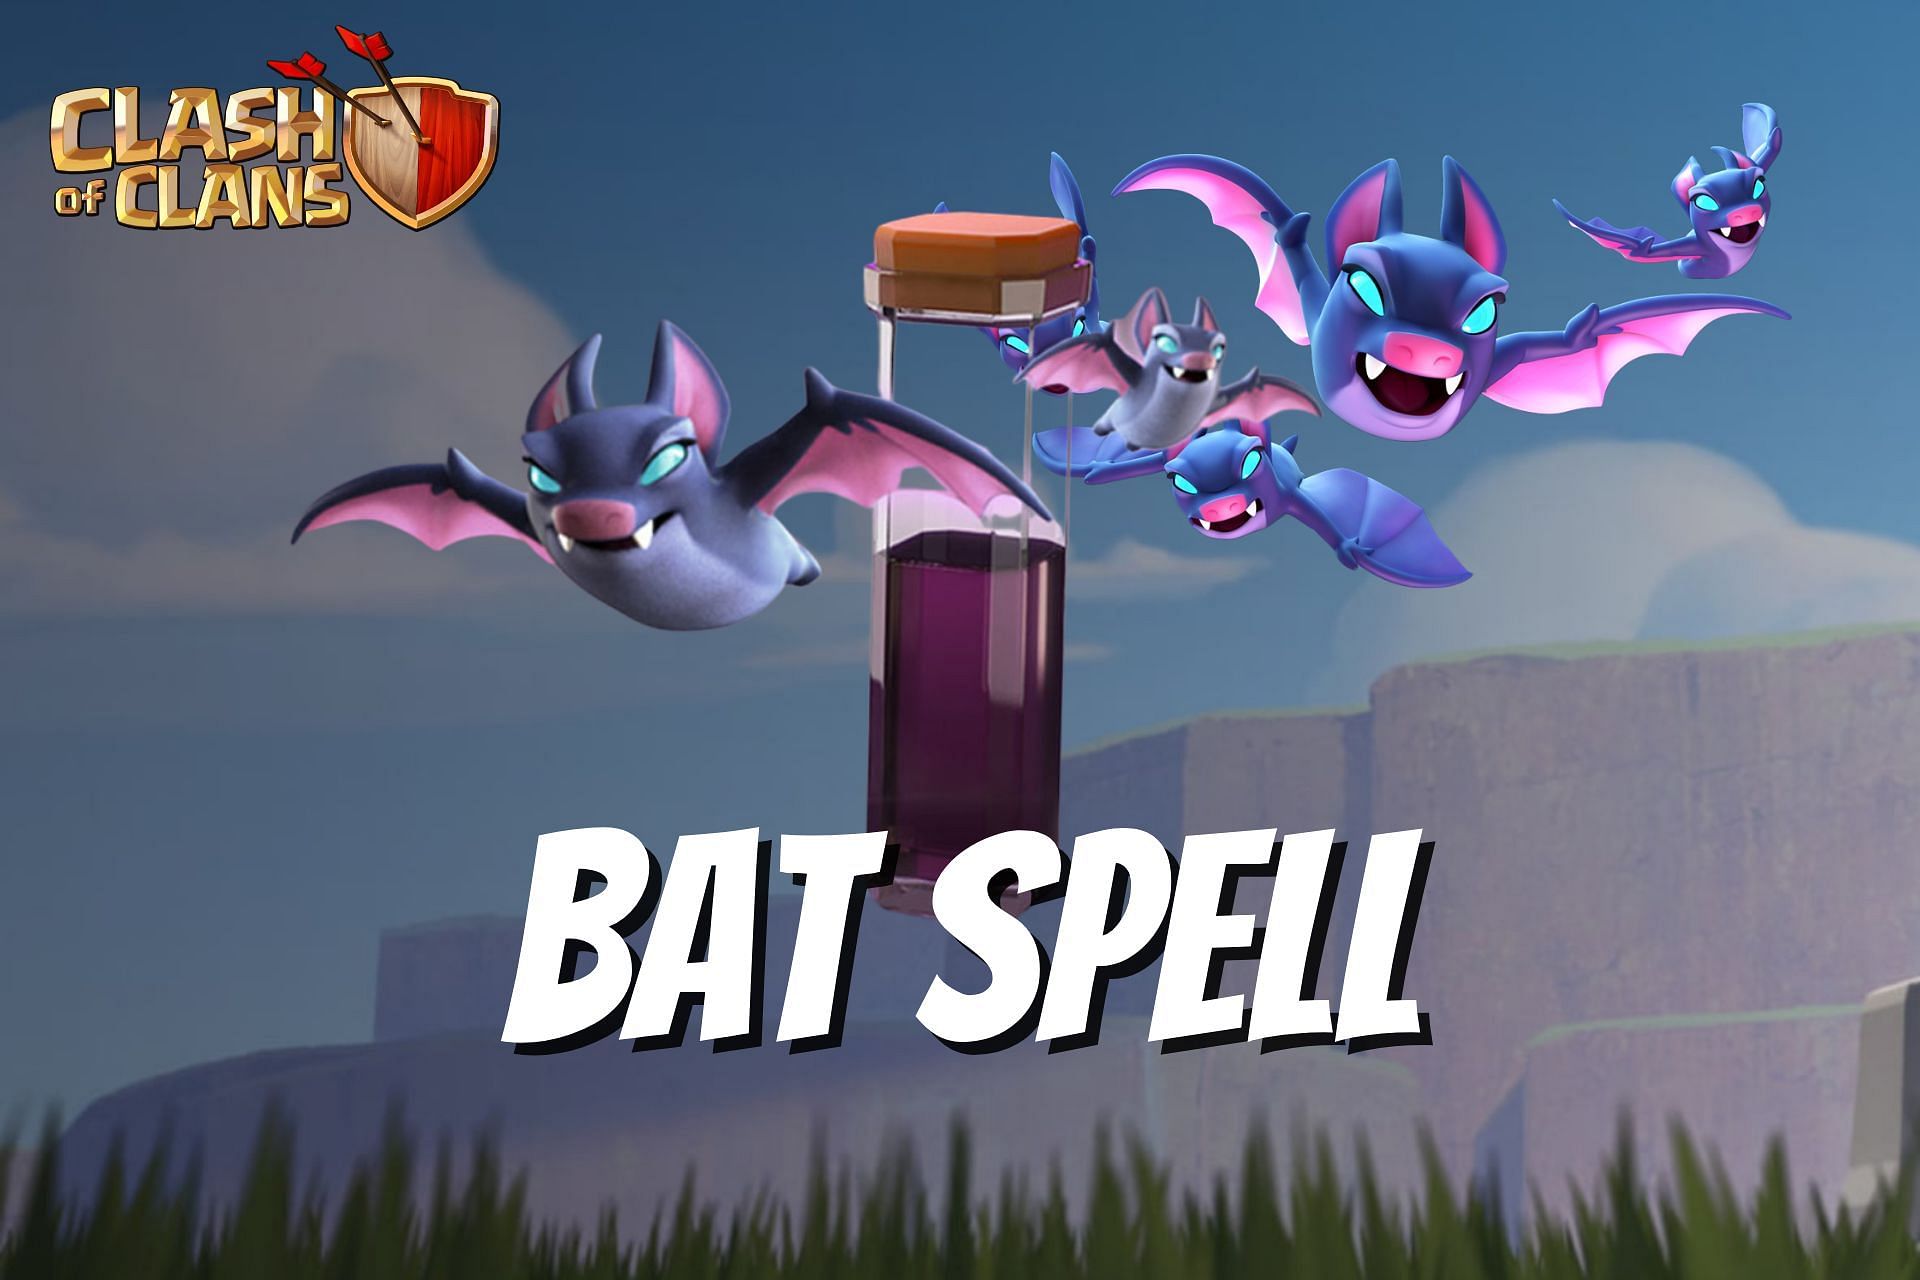 The Bat Spell in Clash of Clans (Image via Sportskeeda)